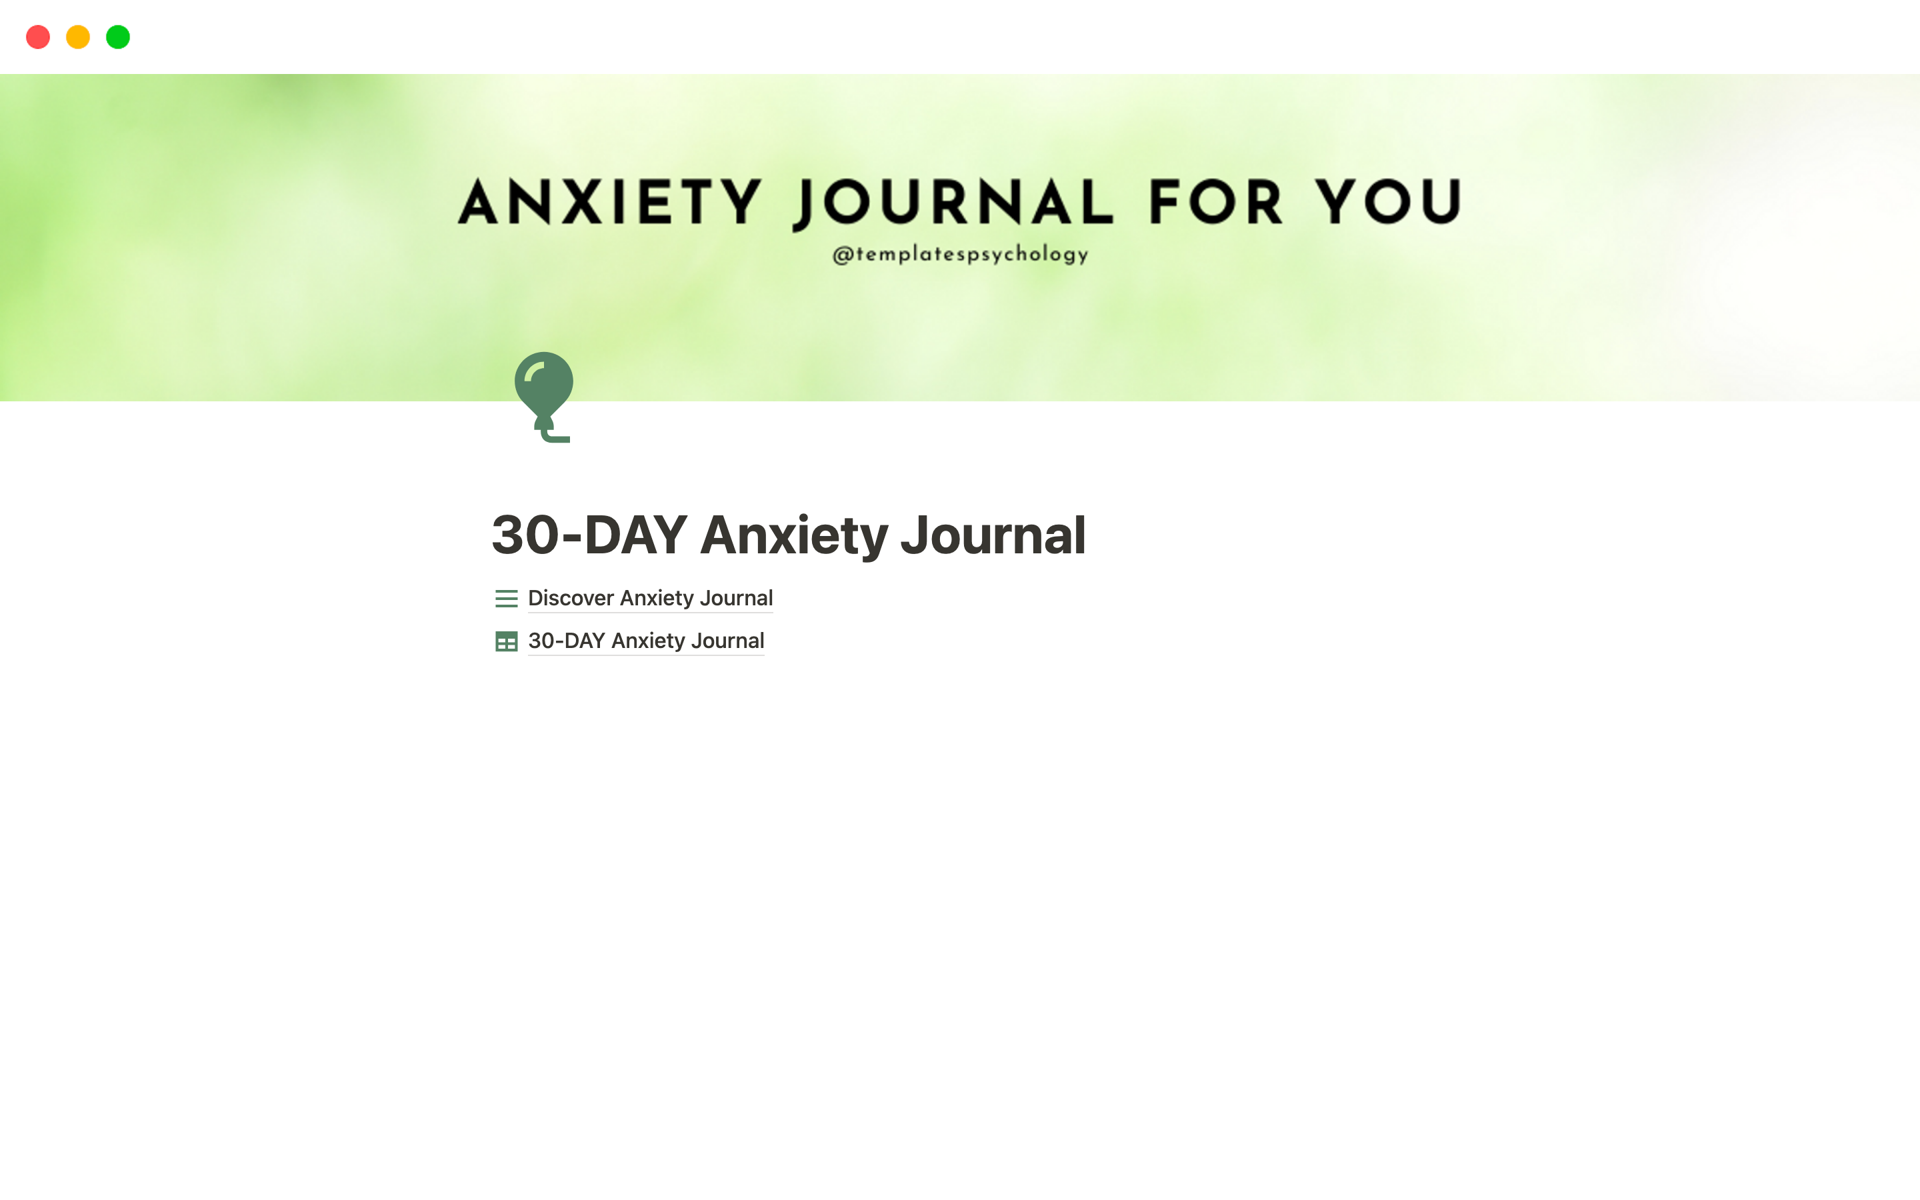 Aperçu du modèle de 30-DAY Anxiety Journal